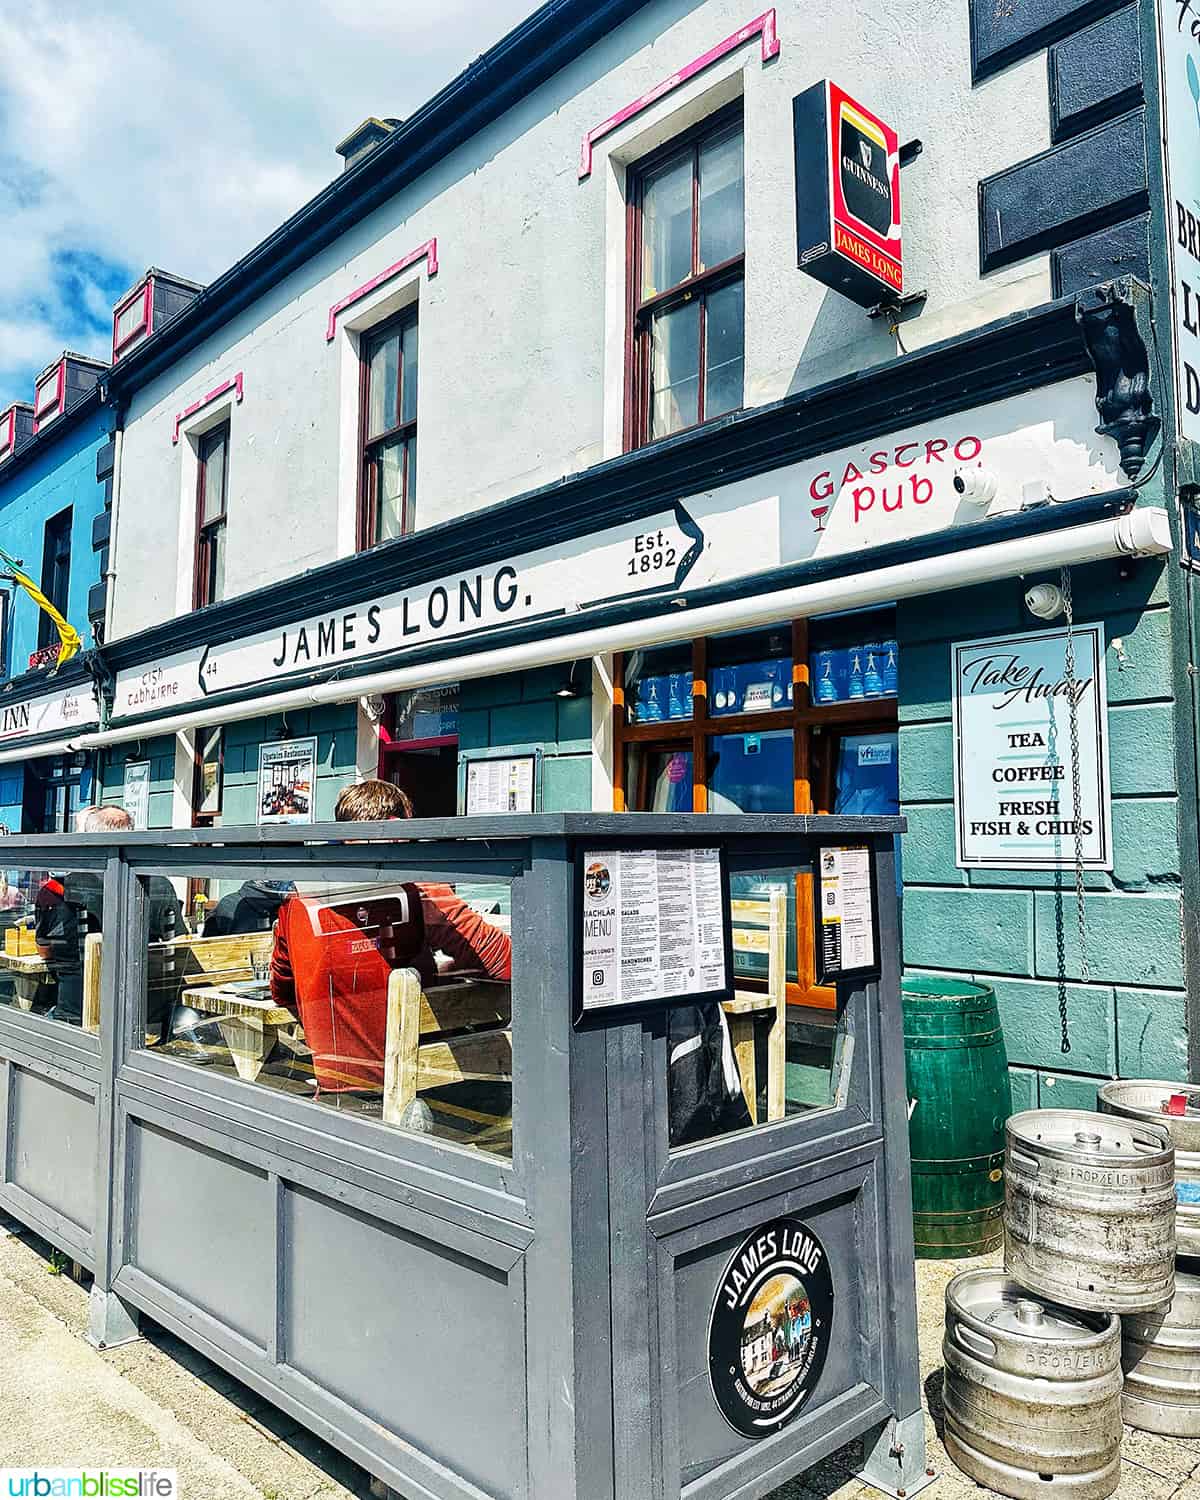 james long pub in dingle, ireland